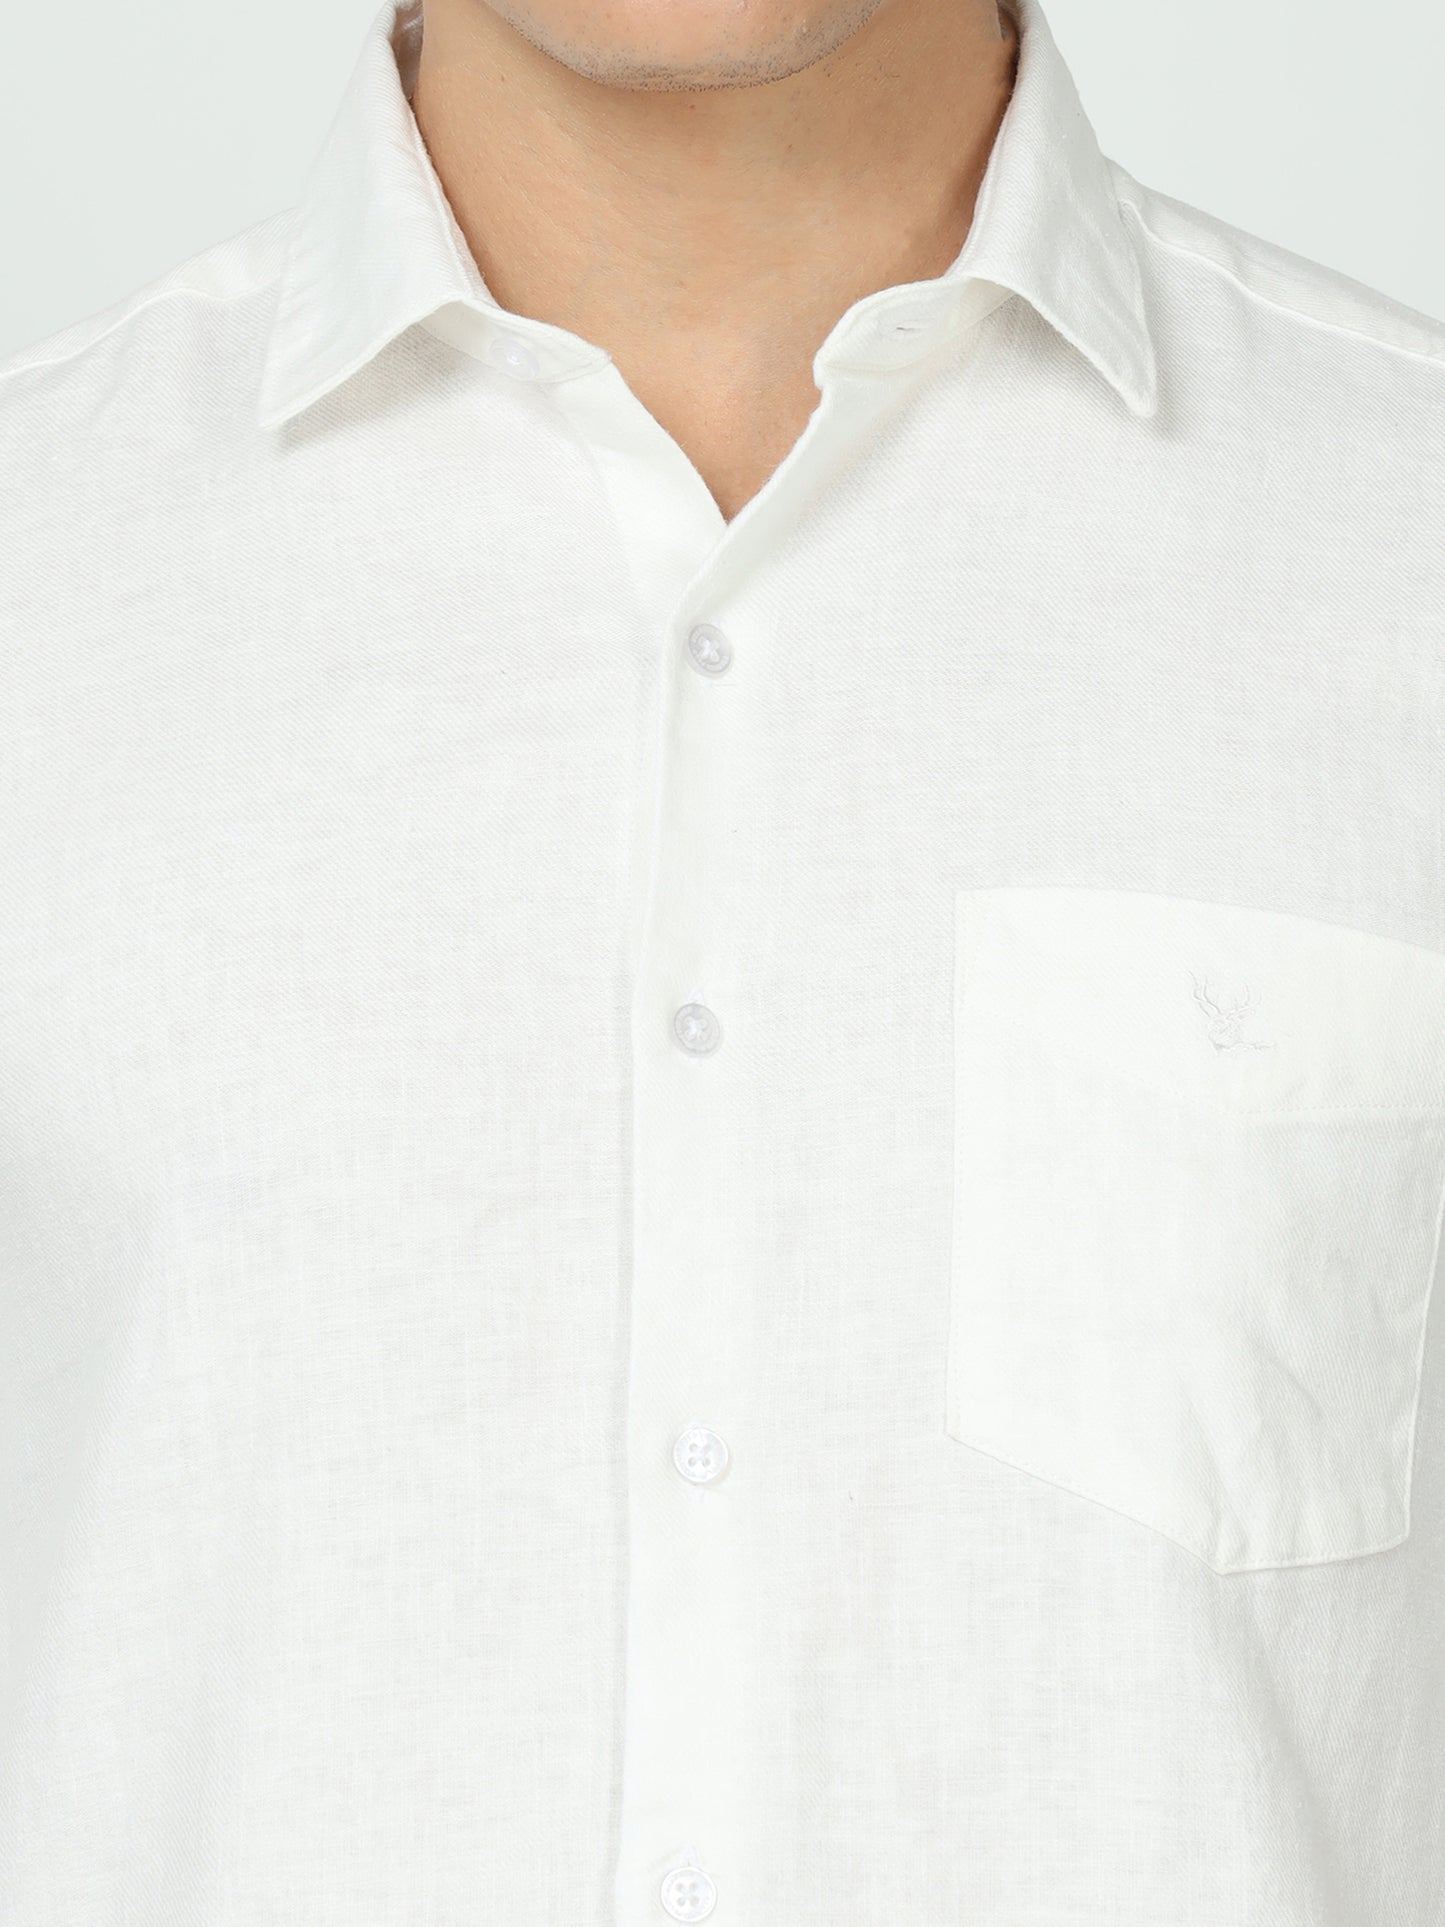 Mens White Linen Shirt